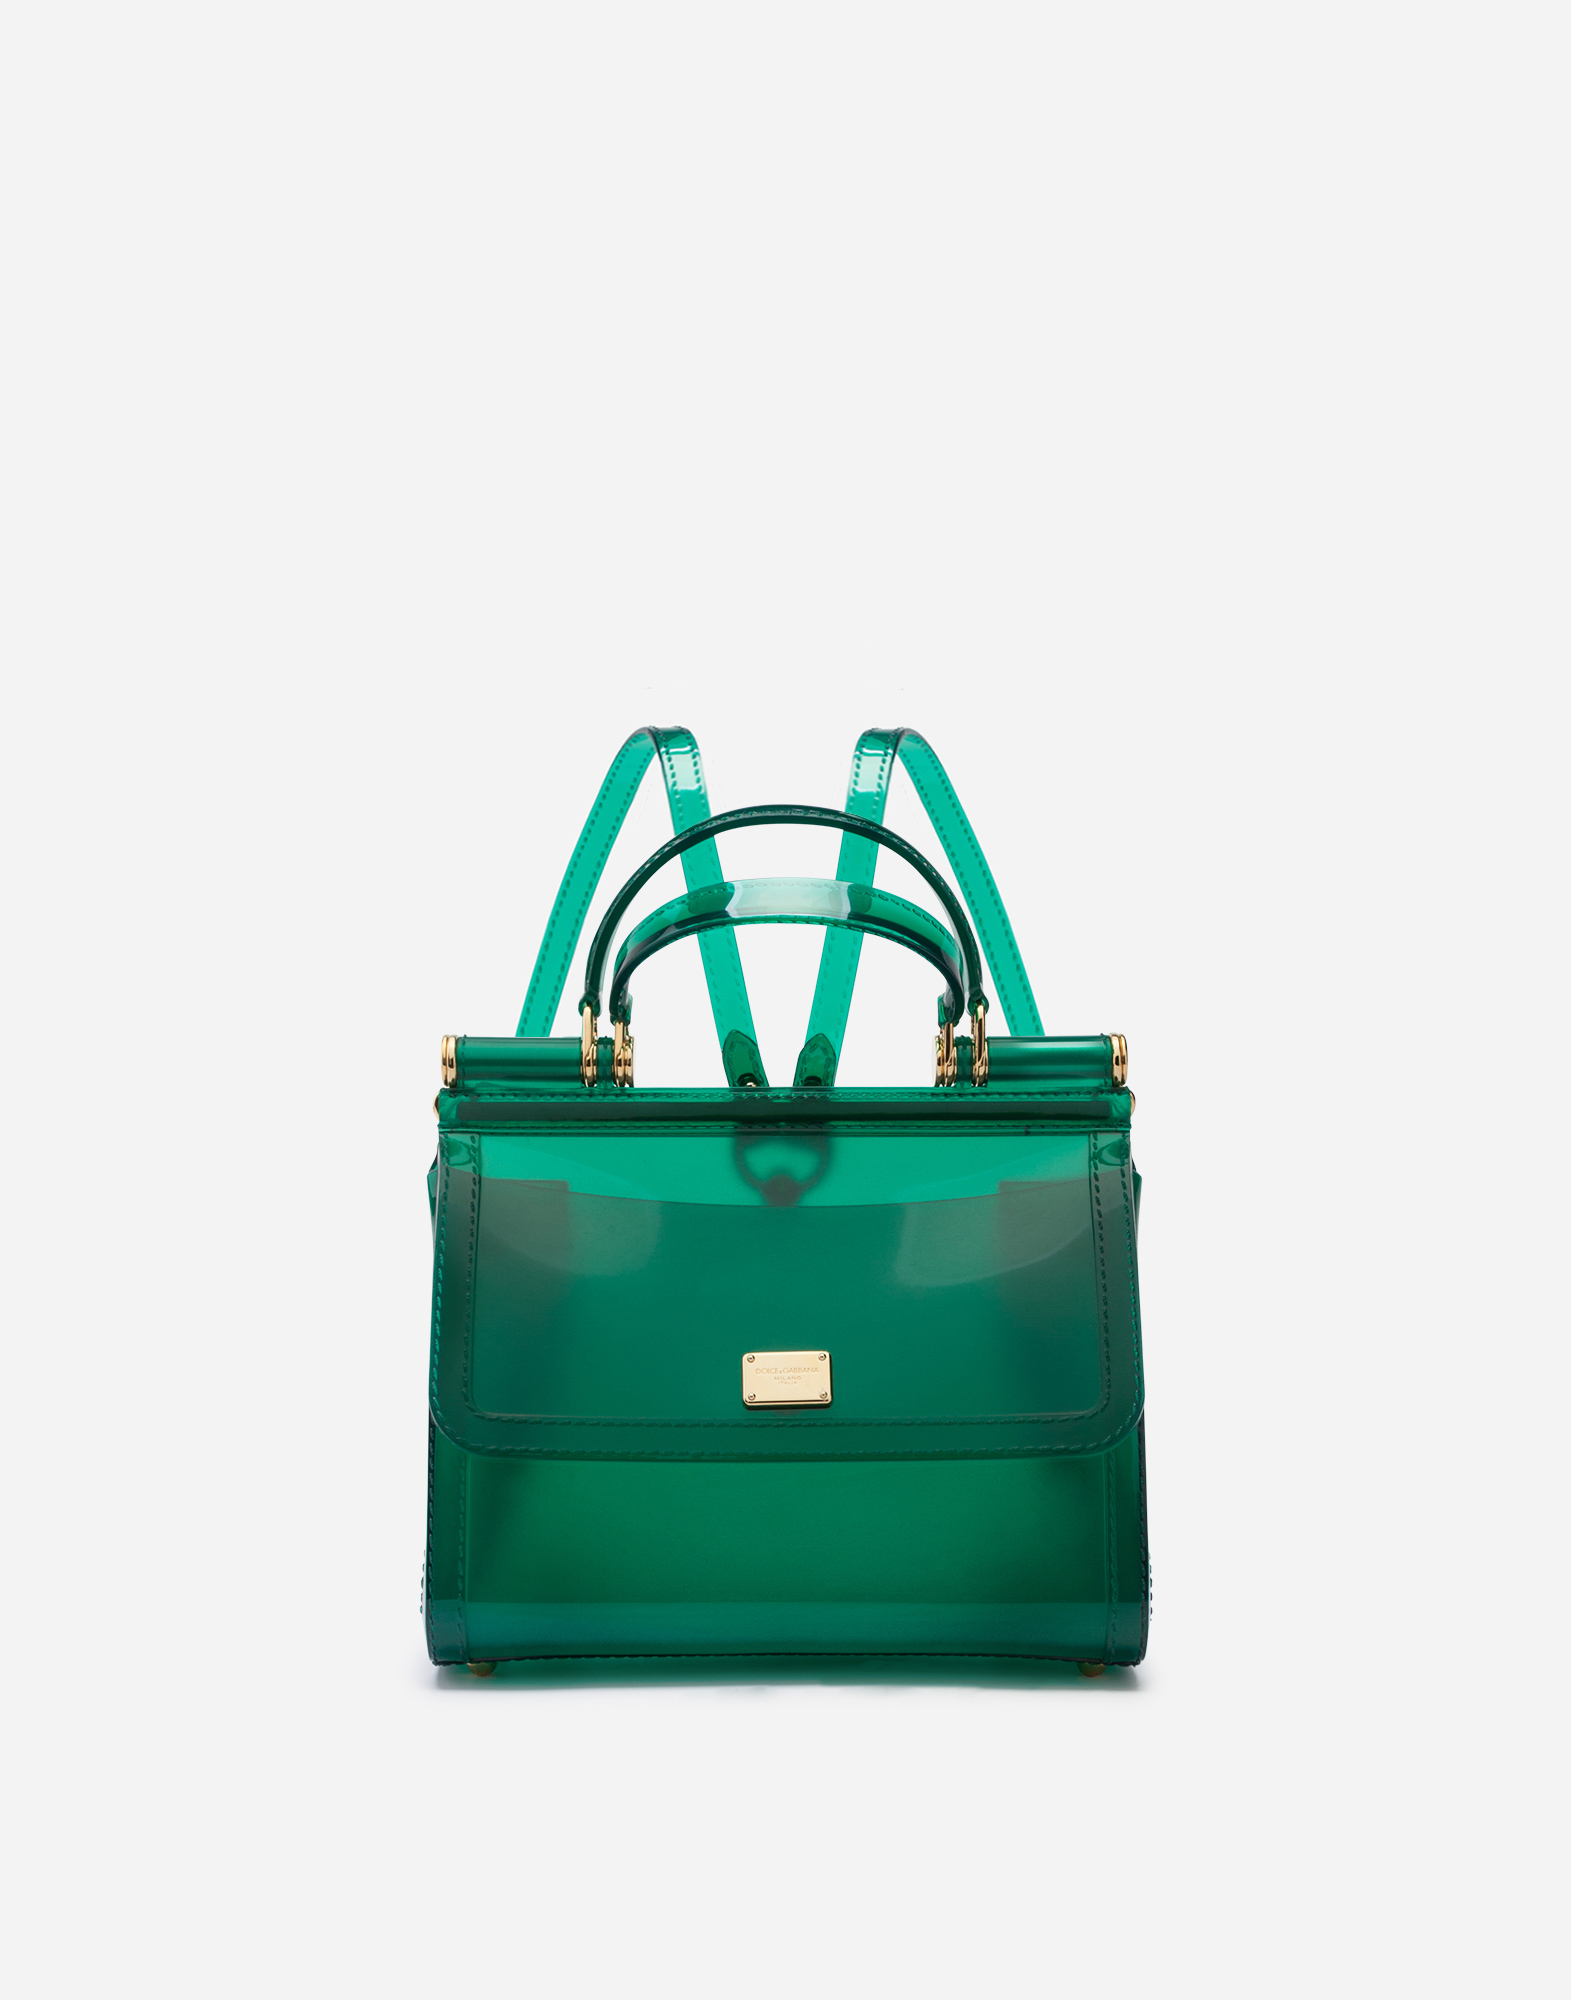 Dolce & Gabbana Sicily Translucent Top Handle Bag in Green